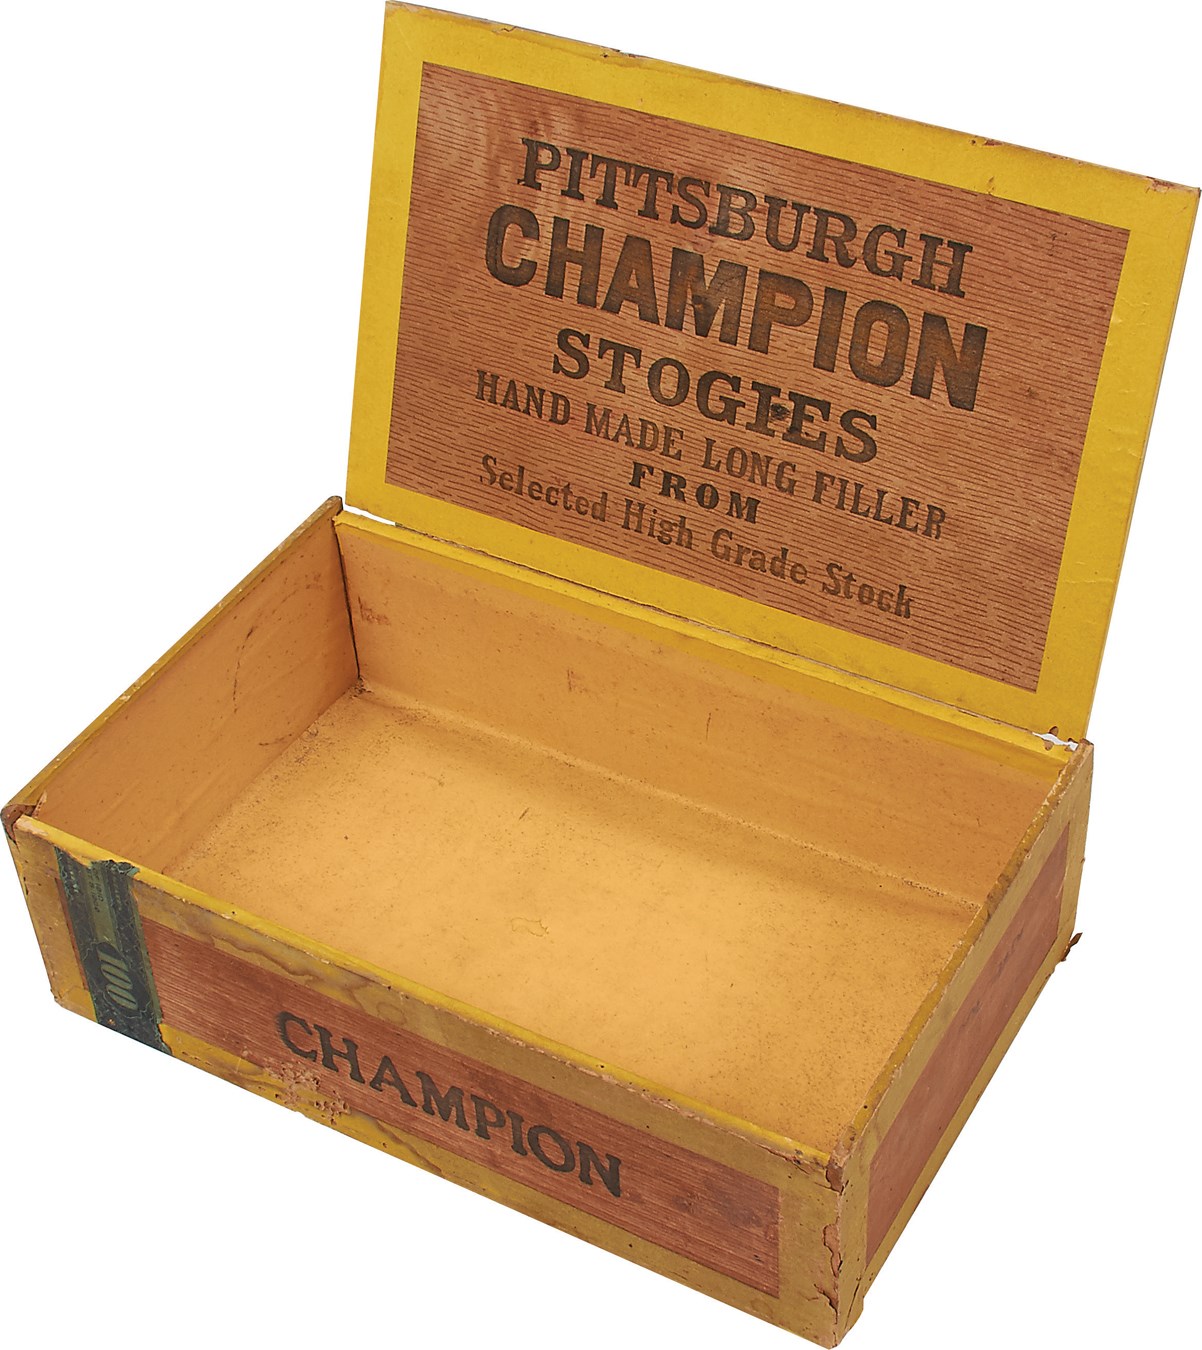 Early Baseball - 1909 World Champion Pittsburgh Pirates "Pittsburgh Champions Stogies" Cigar Box